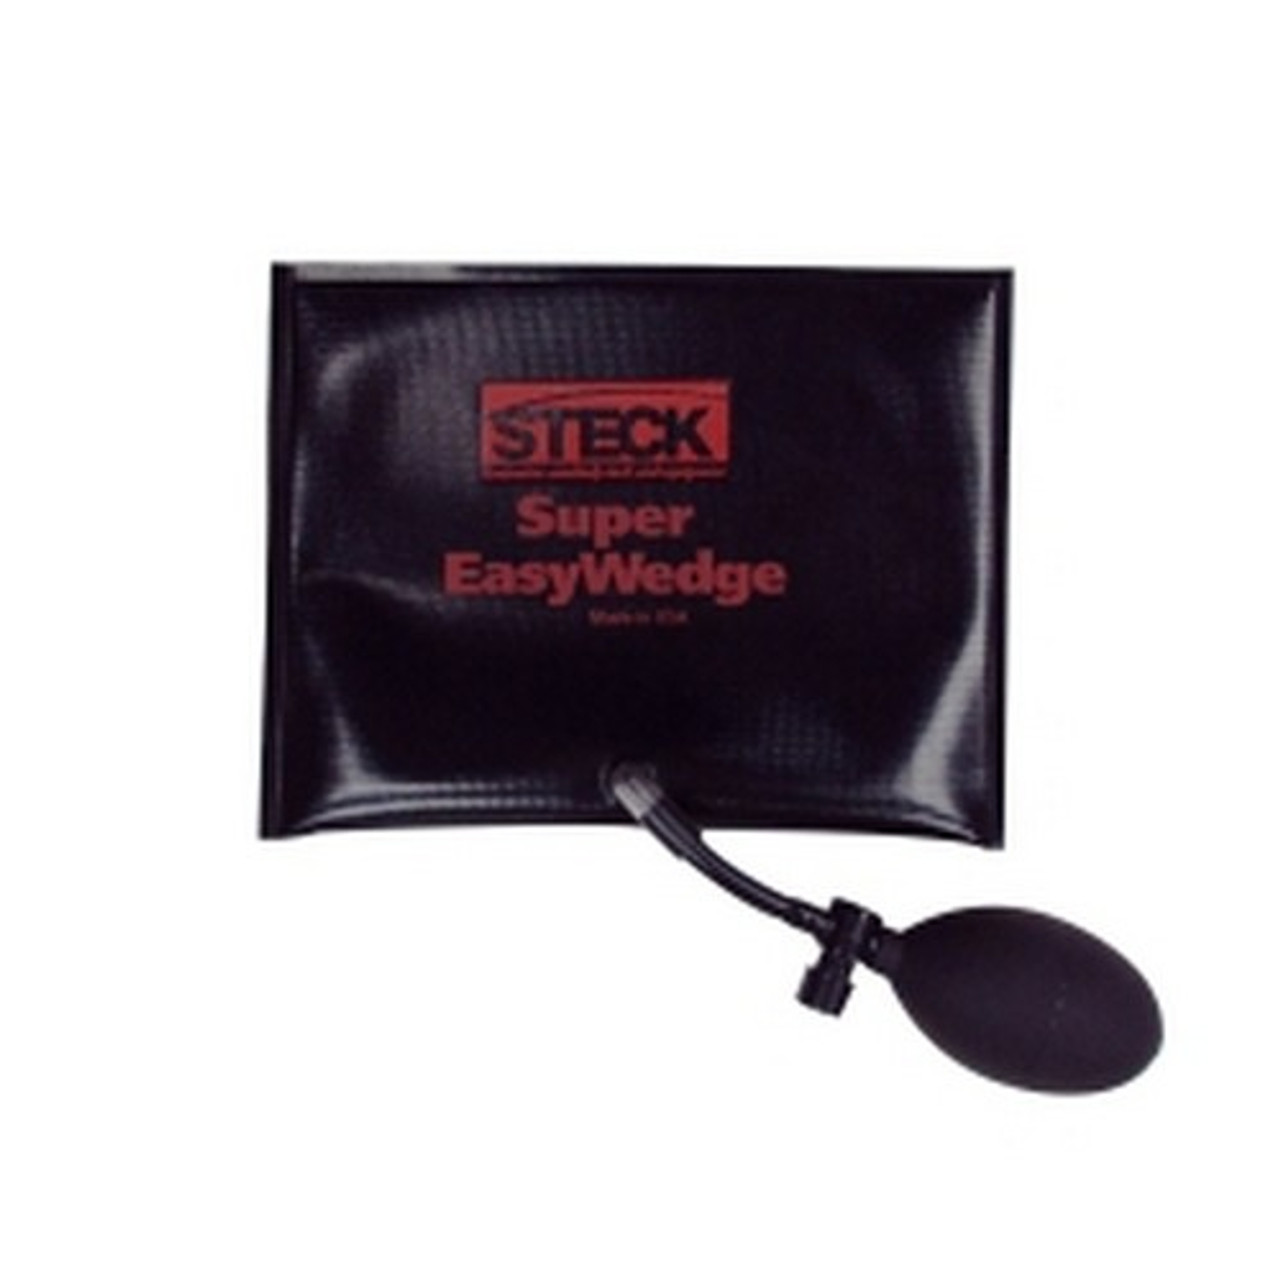 Steck 32935 BigEasy Carrying Case "Big Easy Glow" Storage Bag